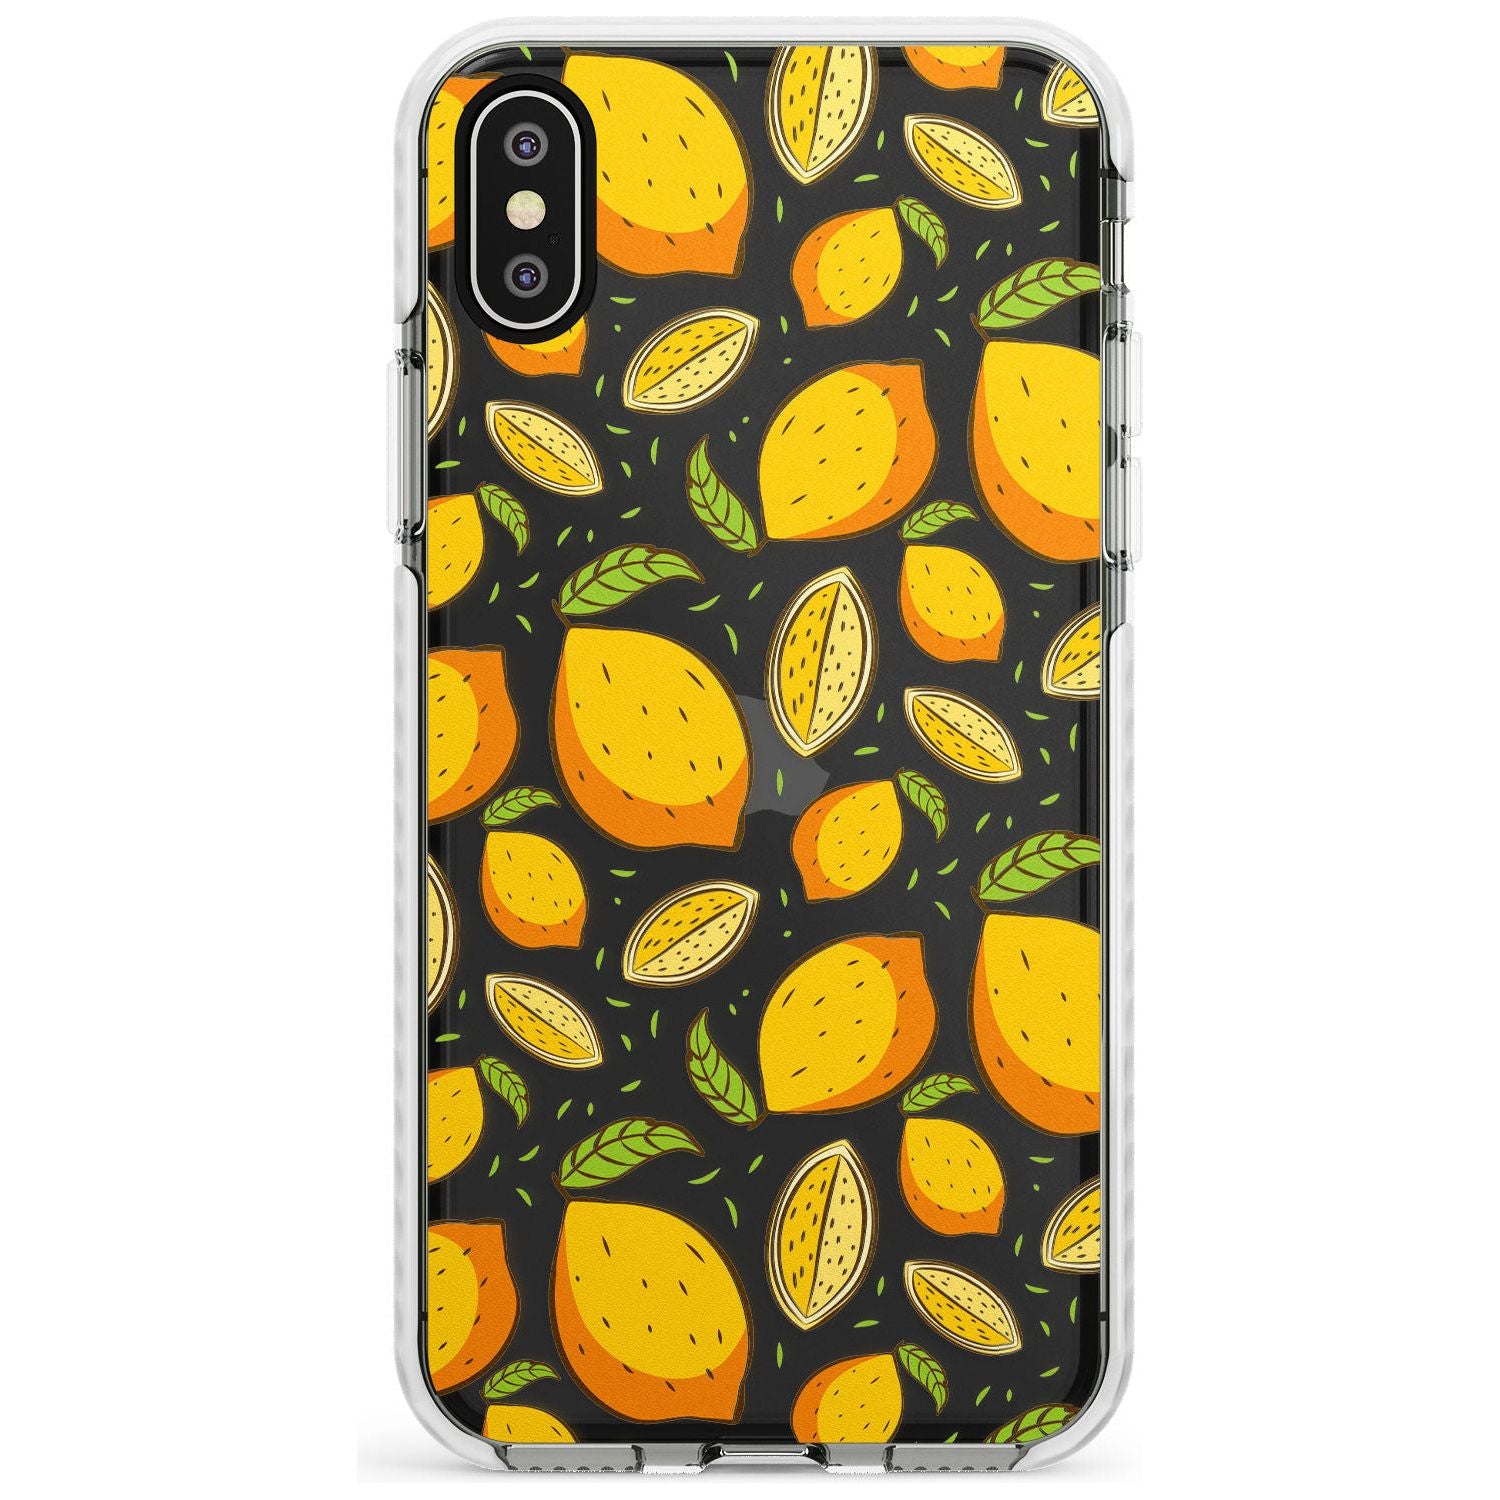 Lemon Pattern Impact Phone Case for iPhone X XS Max XR